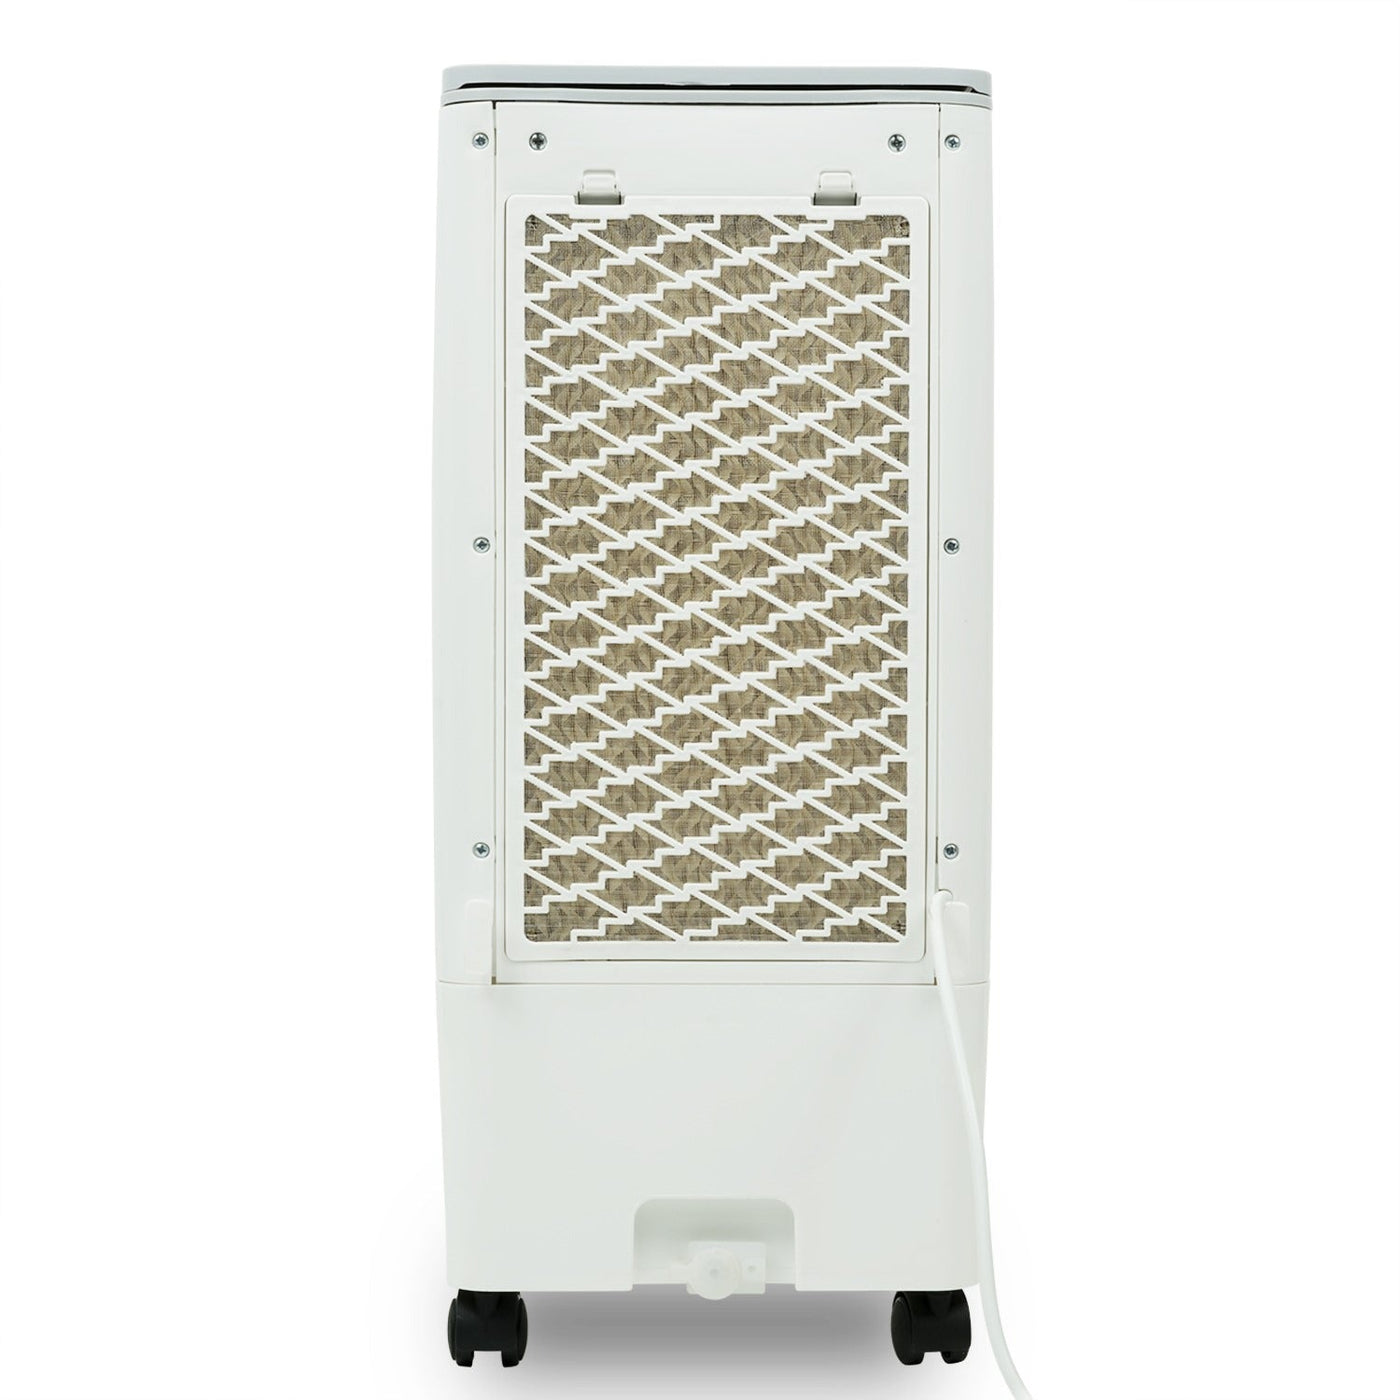 ElectriQ 6 Litre Evaporative Air Cooler (AC60E)